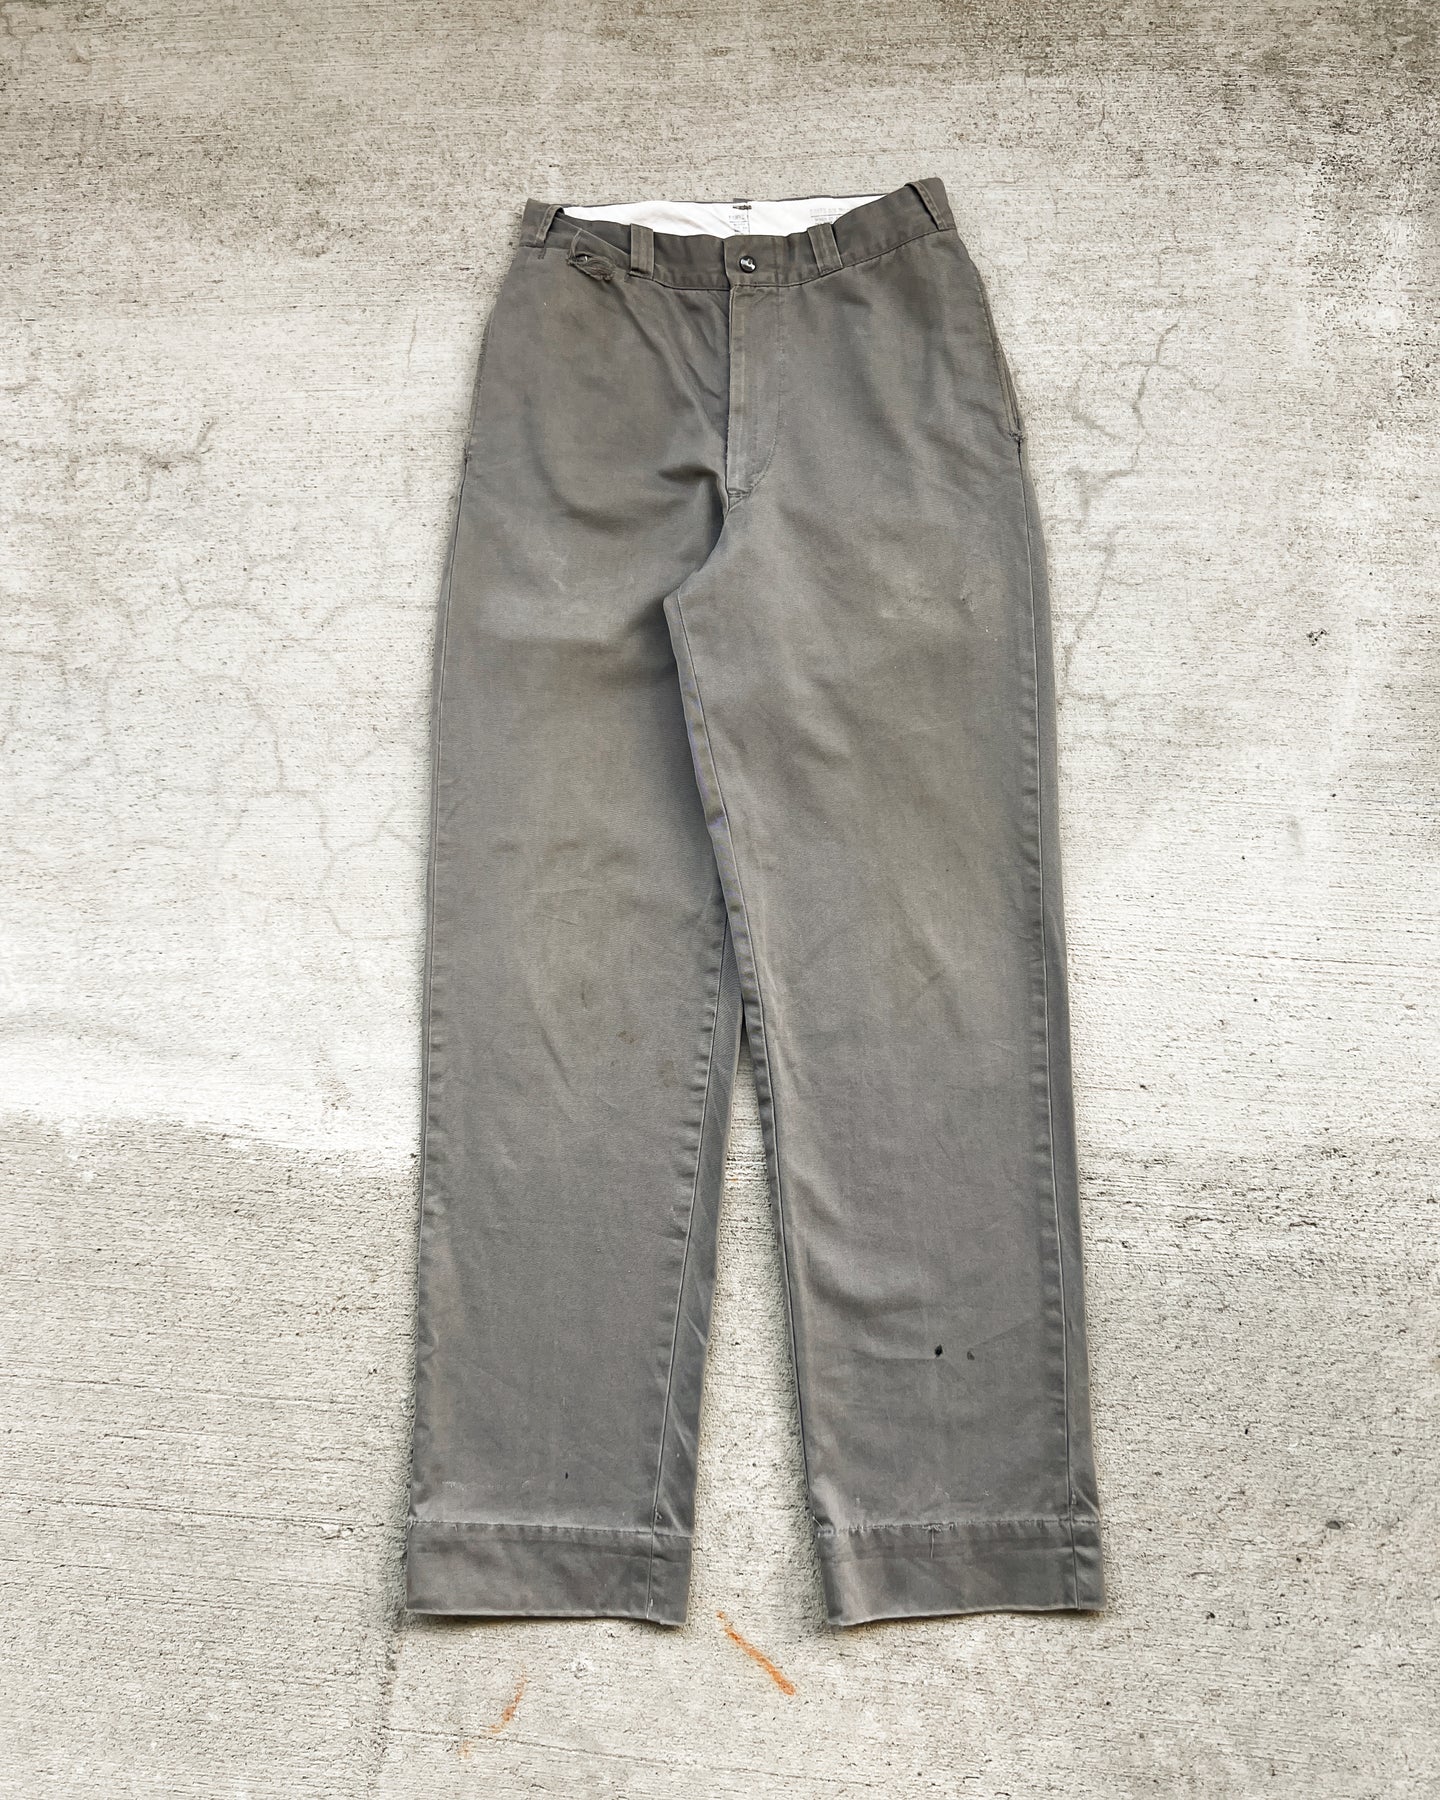 1950s Grey Chino Work Pants - Size 28 x 32